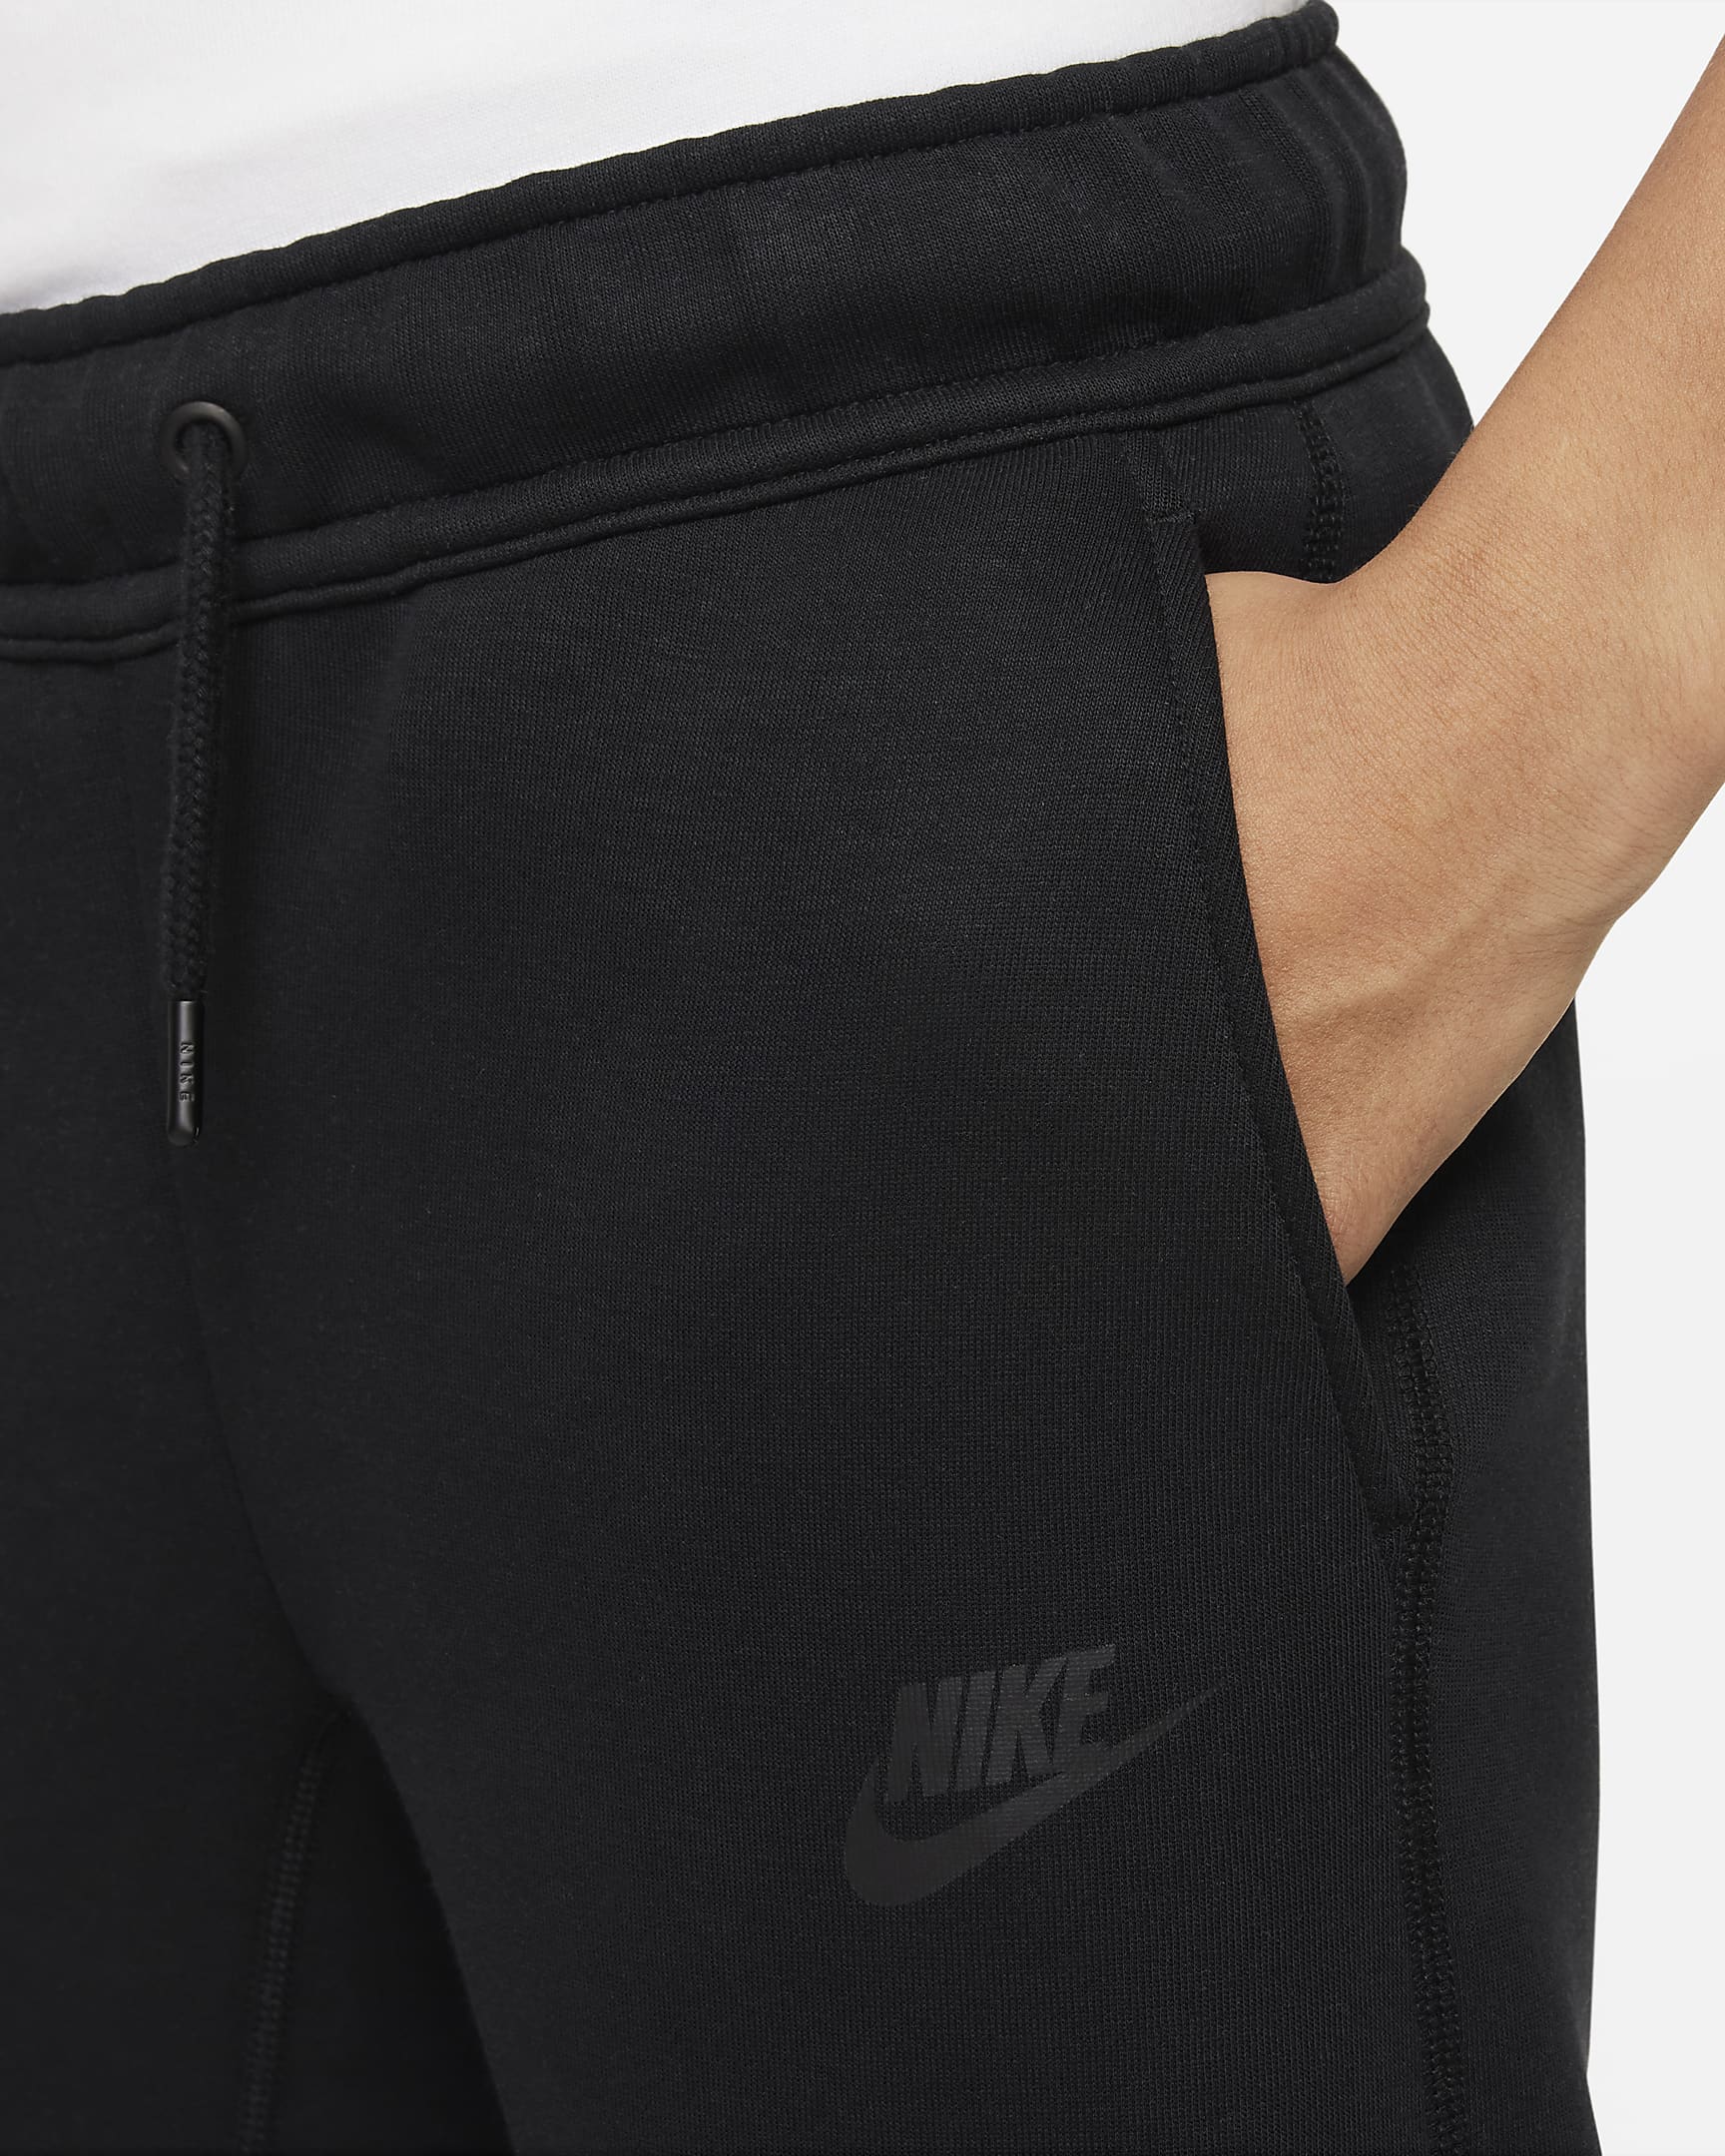 Pantalon Nike Sportswear Tech Fleece pour Garçon plus âgé - Noir/Noir/Noir